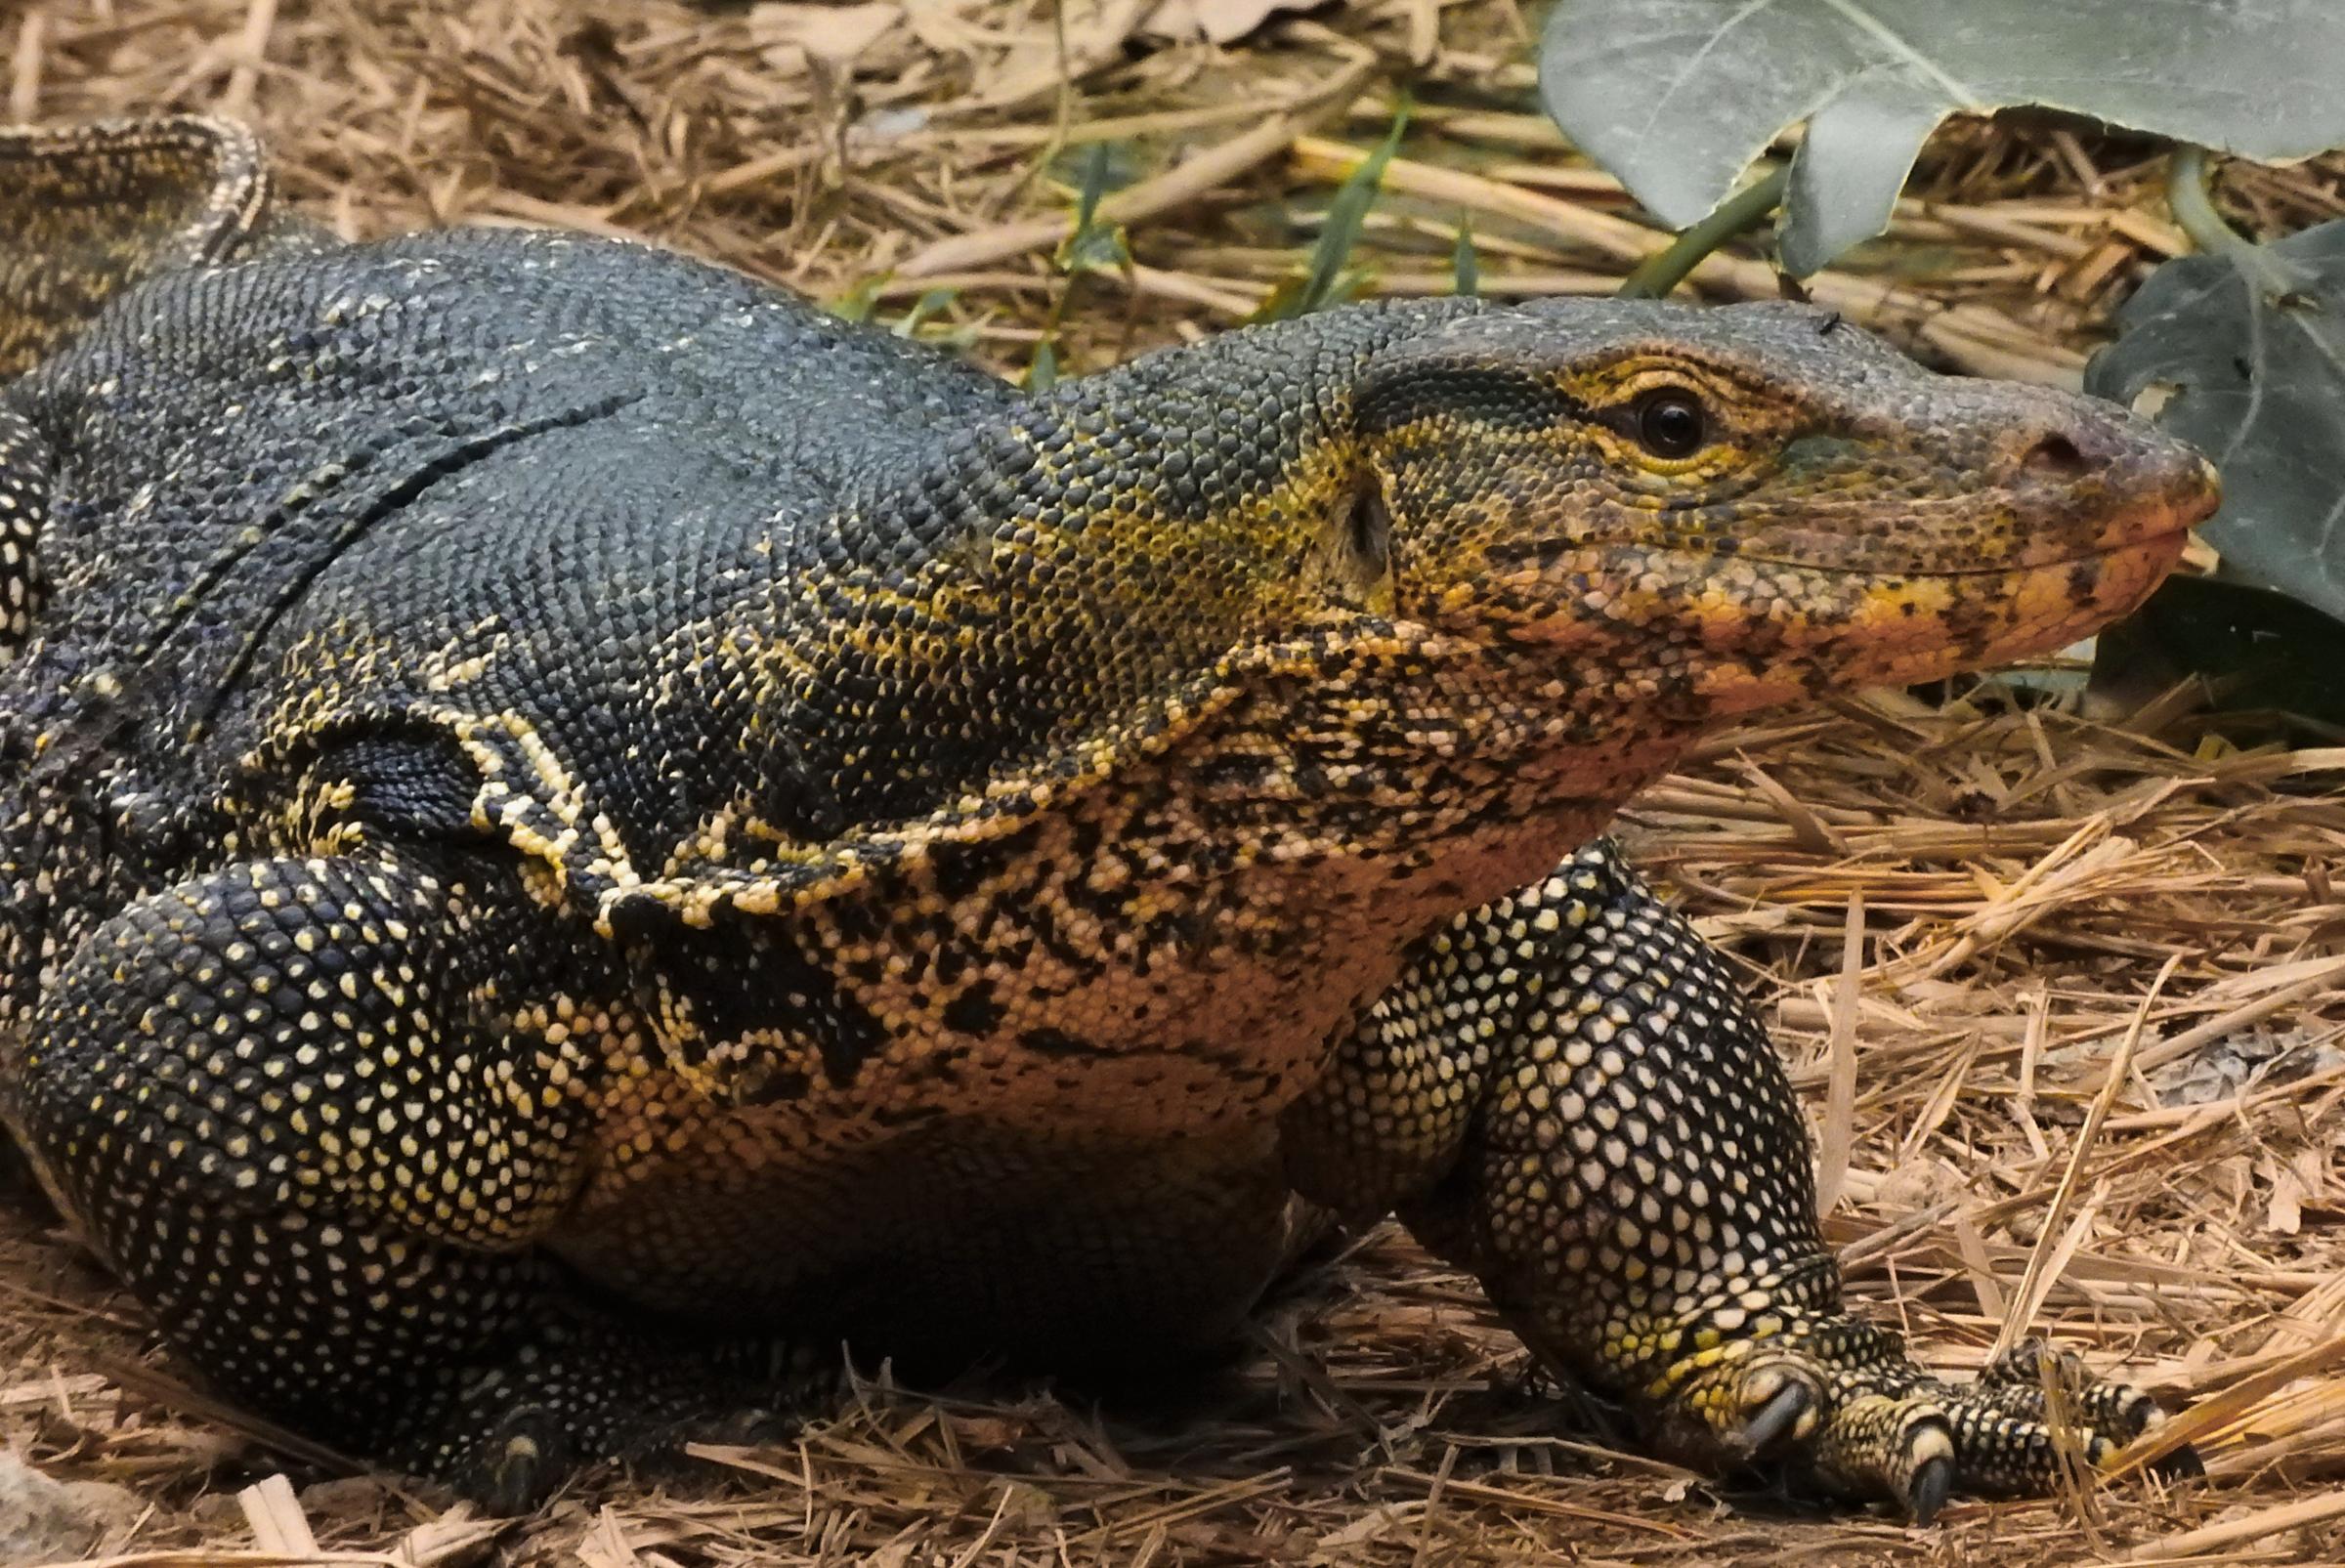 Giant Monitor Lizard Is Terrorizing Florida Family | WUSF News